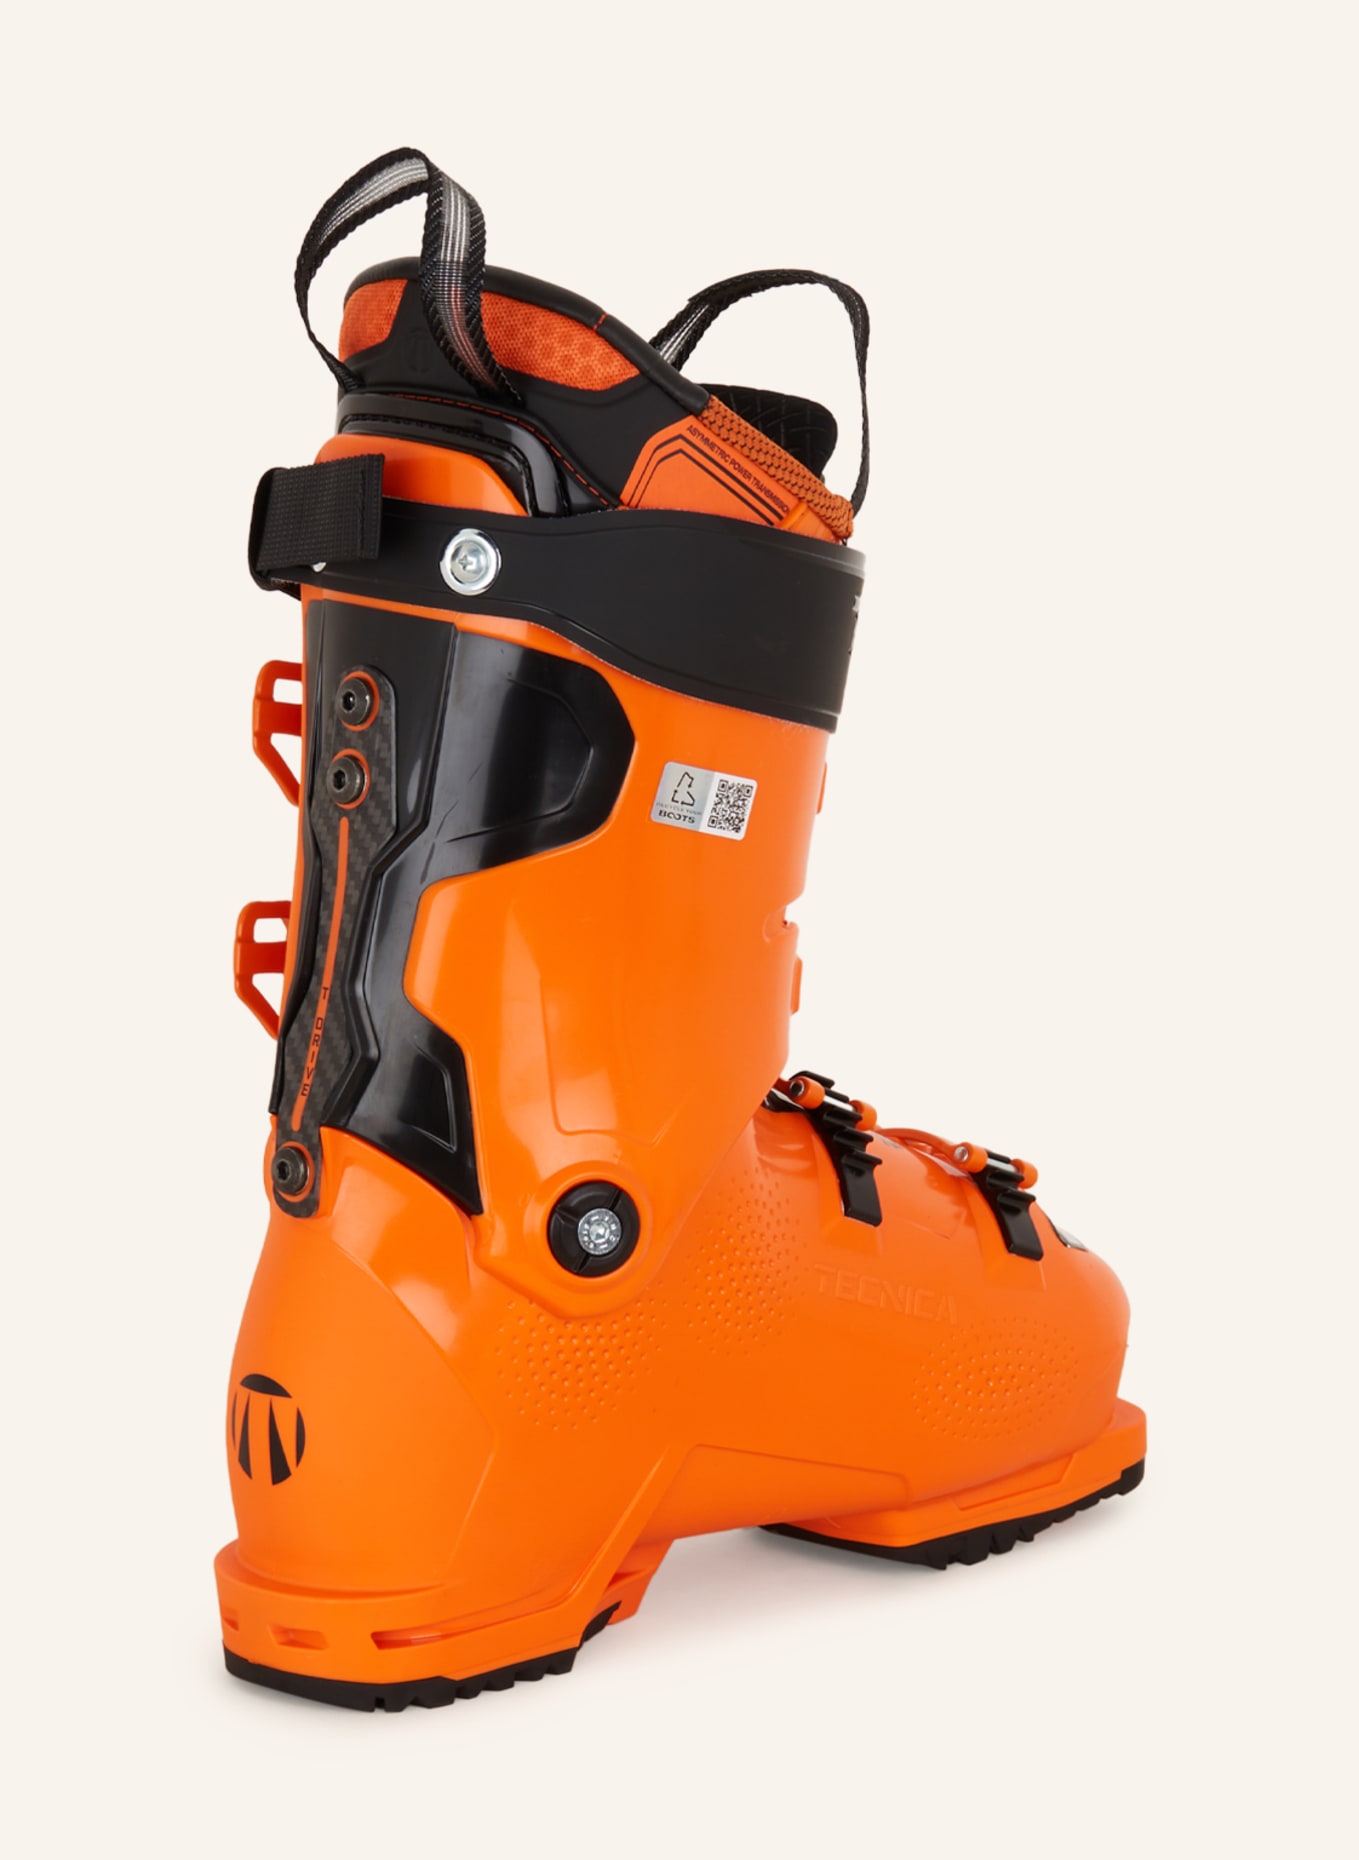 Tecnica Mach1 HV 120 TD GW - Men's Ski Boots